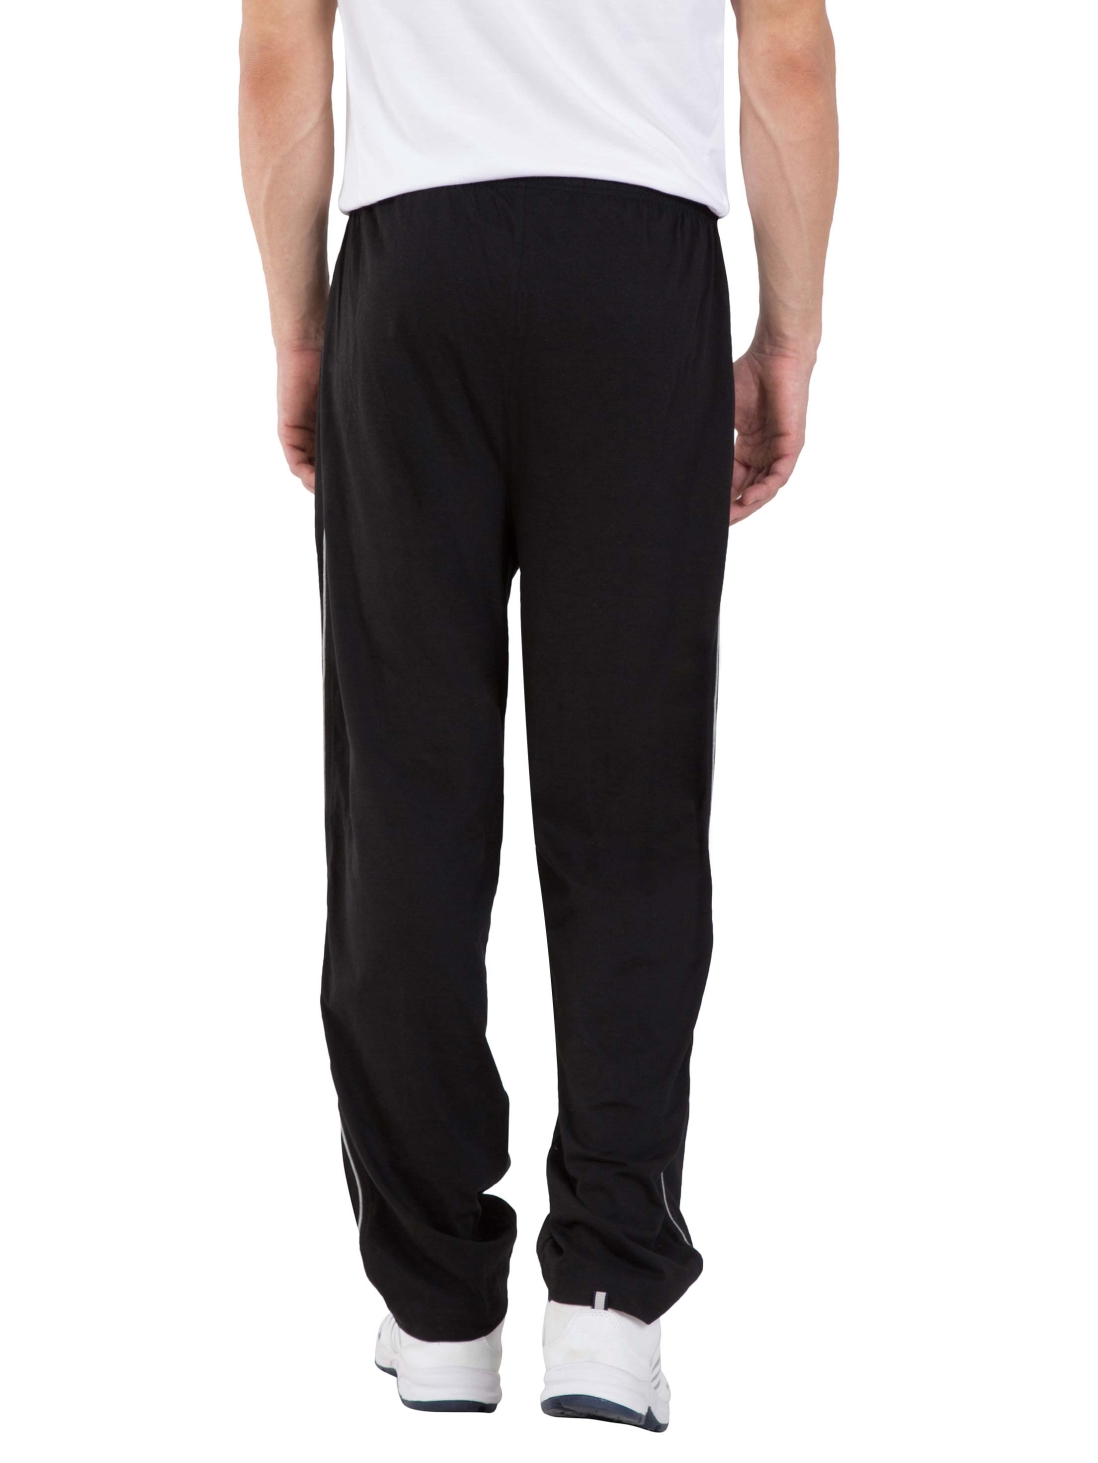 Buy Jockey Black Jersey Pants - Style Number 9500 Online @ ₹819 from ...